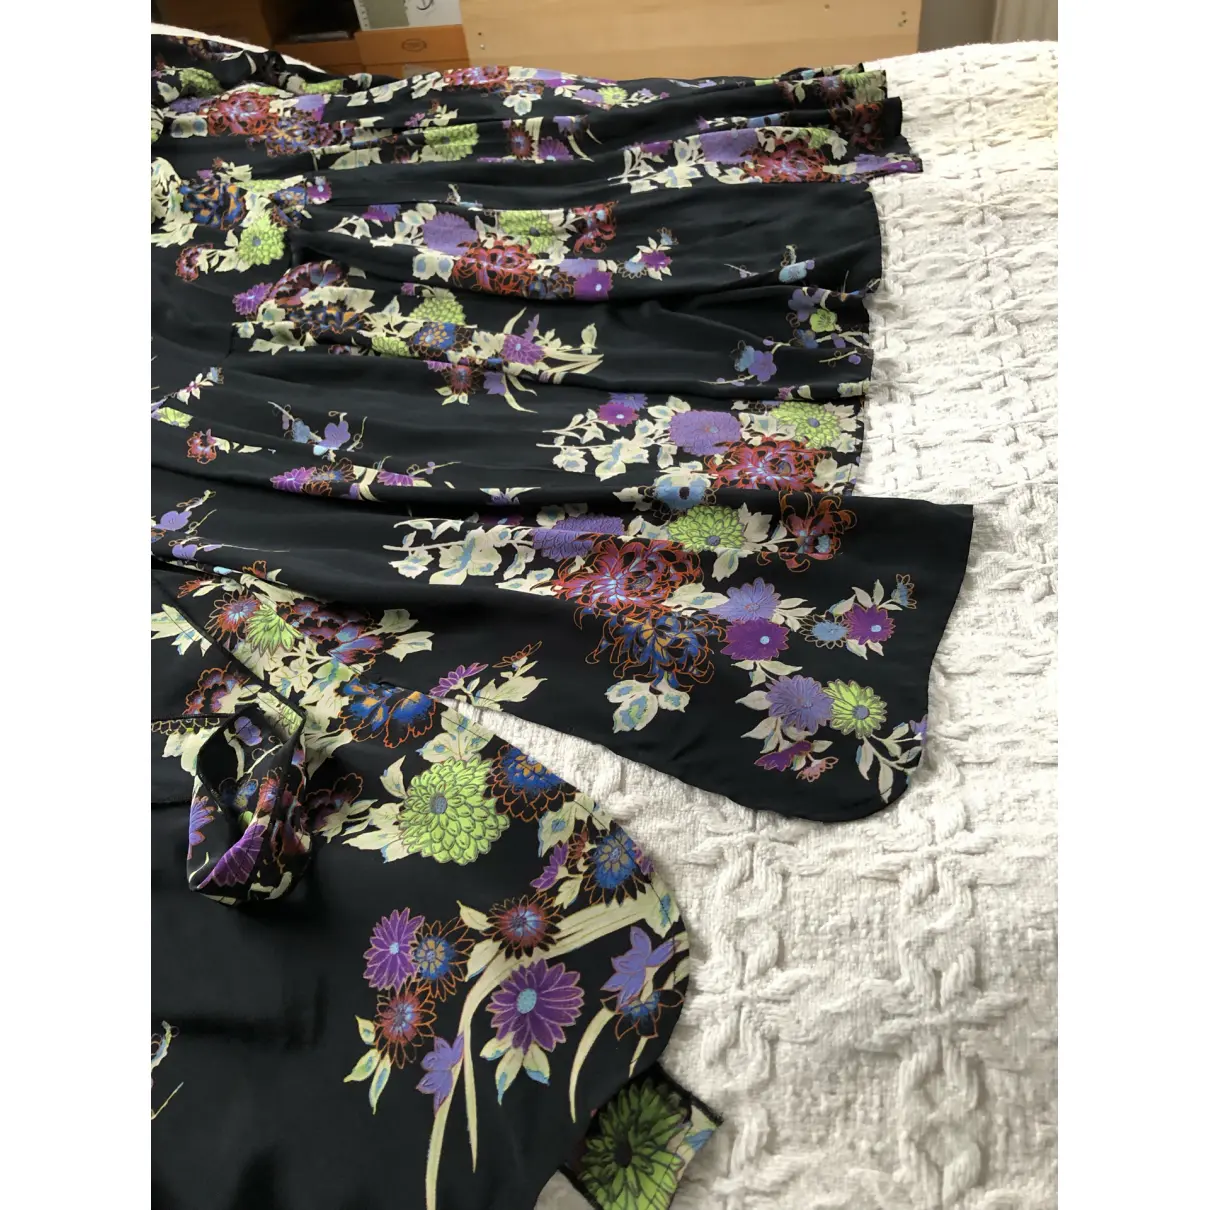 Silk mid-length dress Isabel Marant